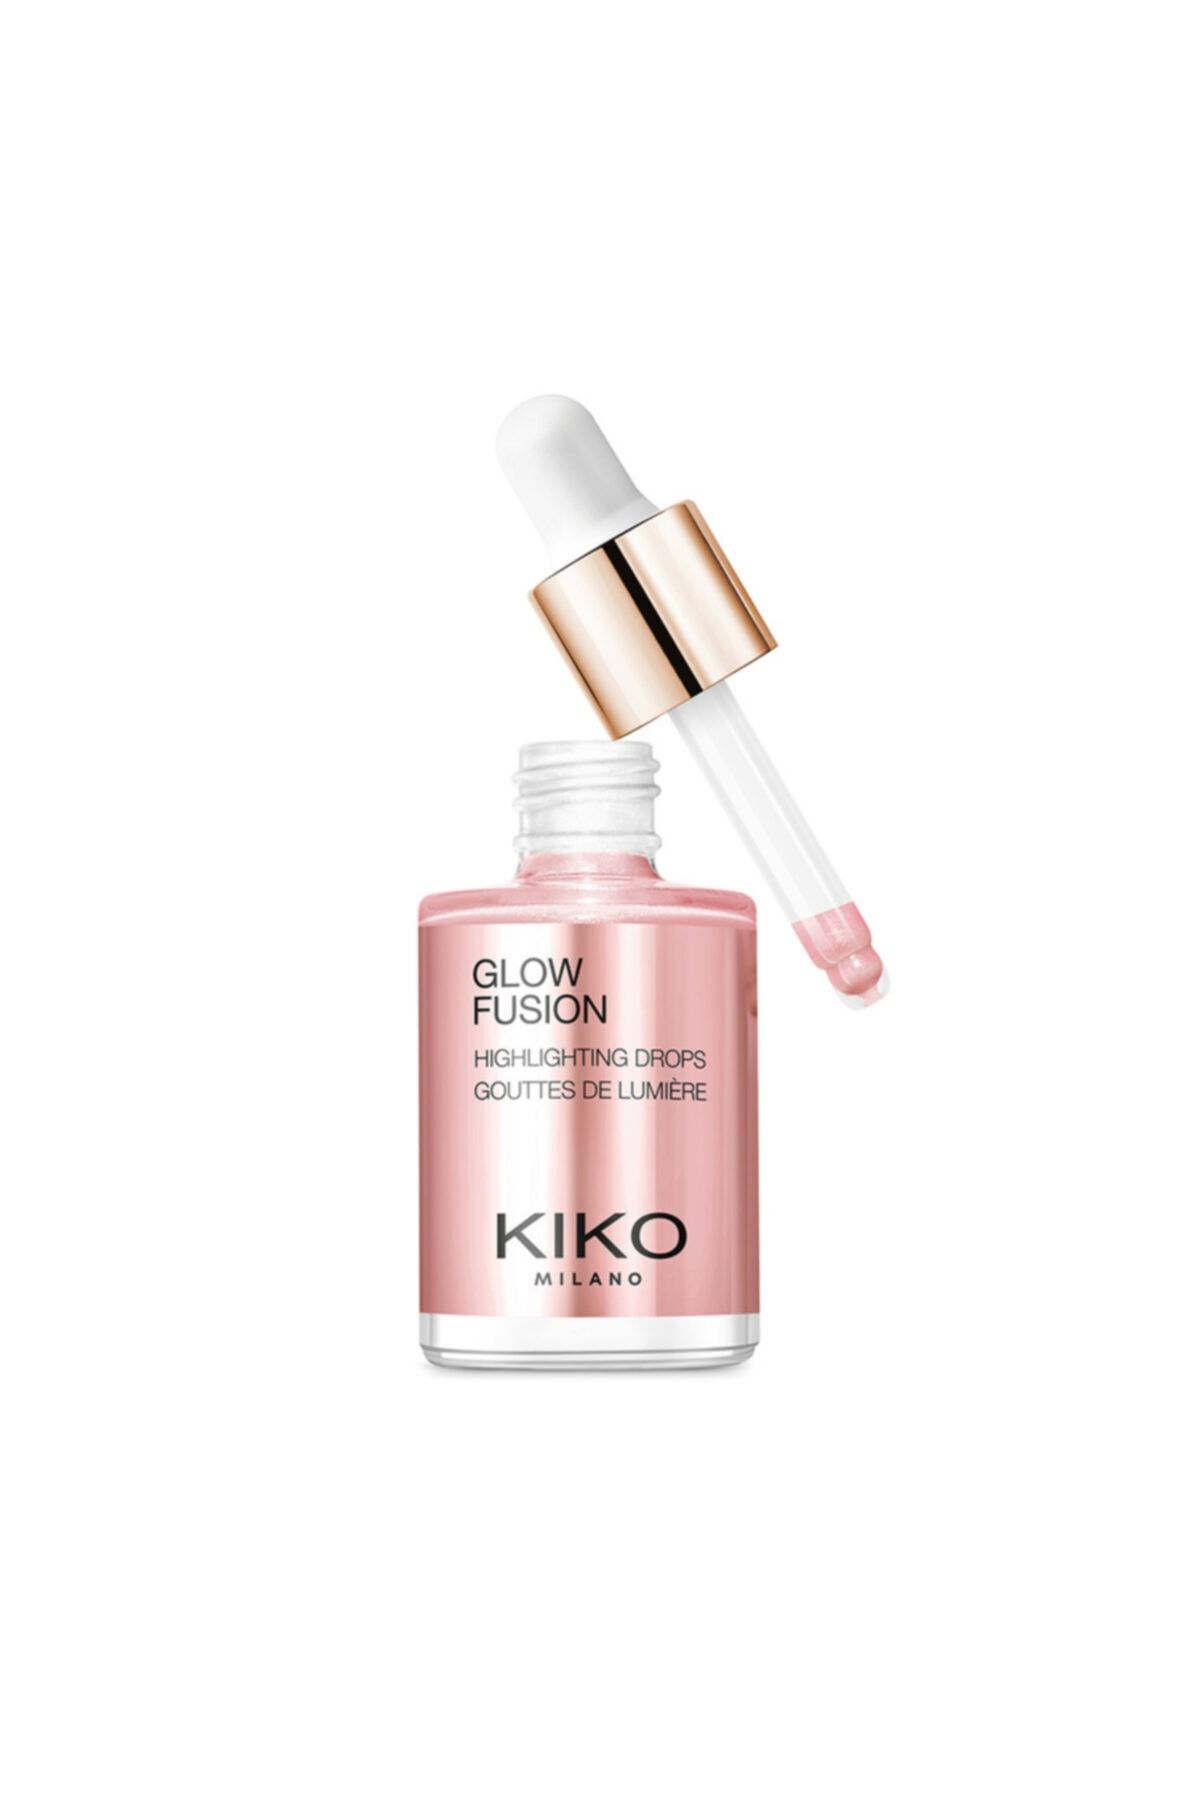 KIKO AYDINLATICI - GLOW FUSION HIGHLIGHTING DROPS 01 Platinum Rose